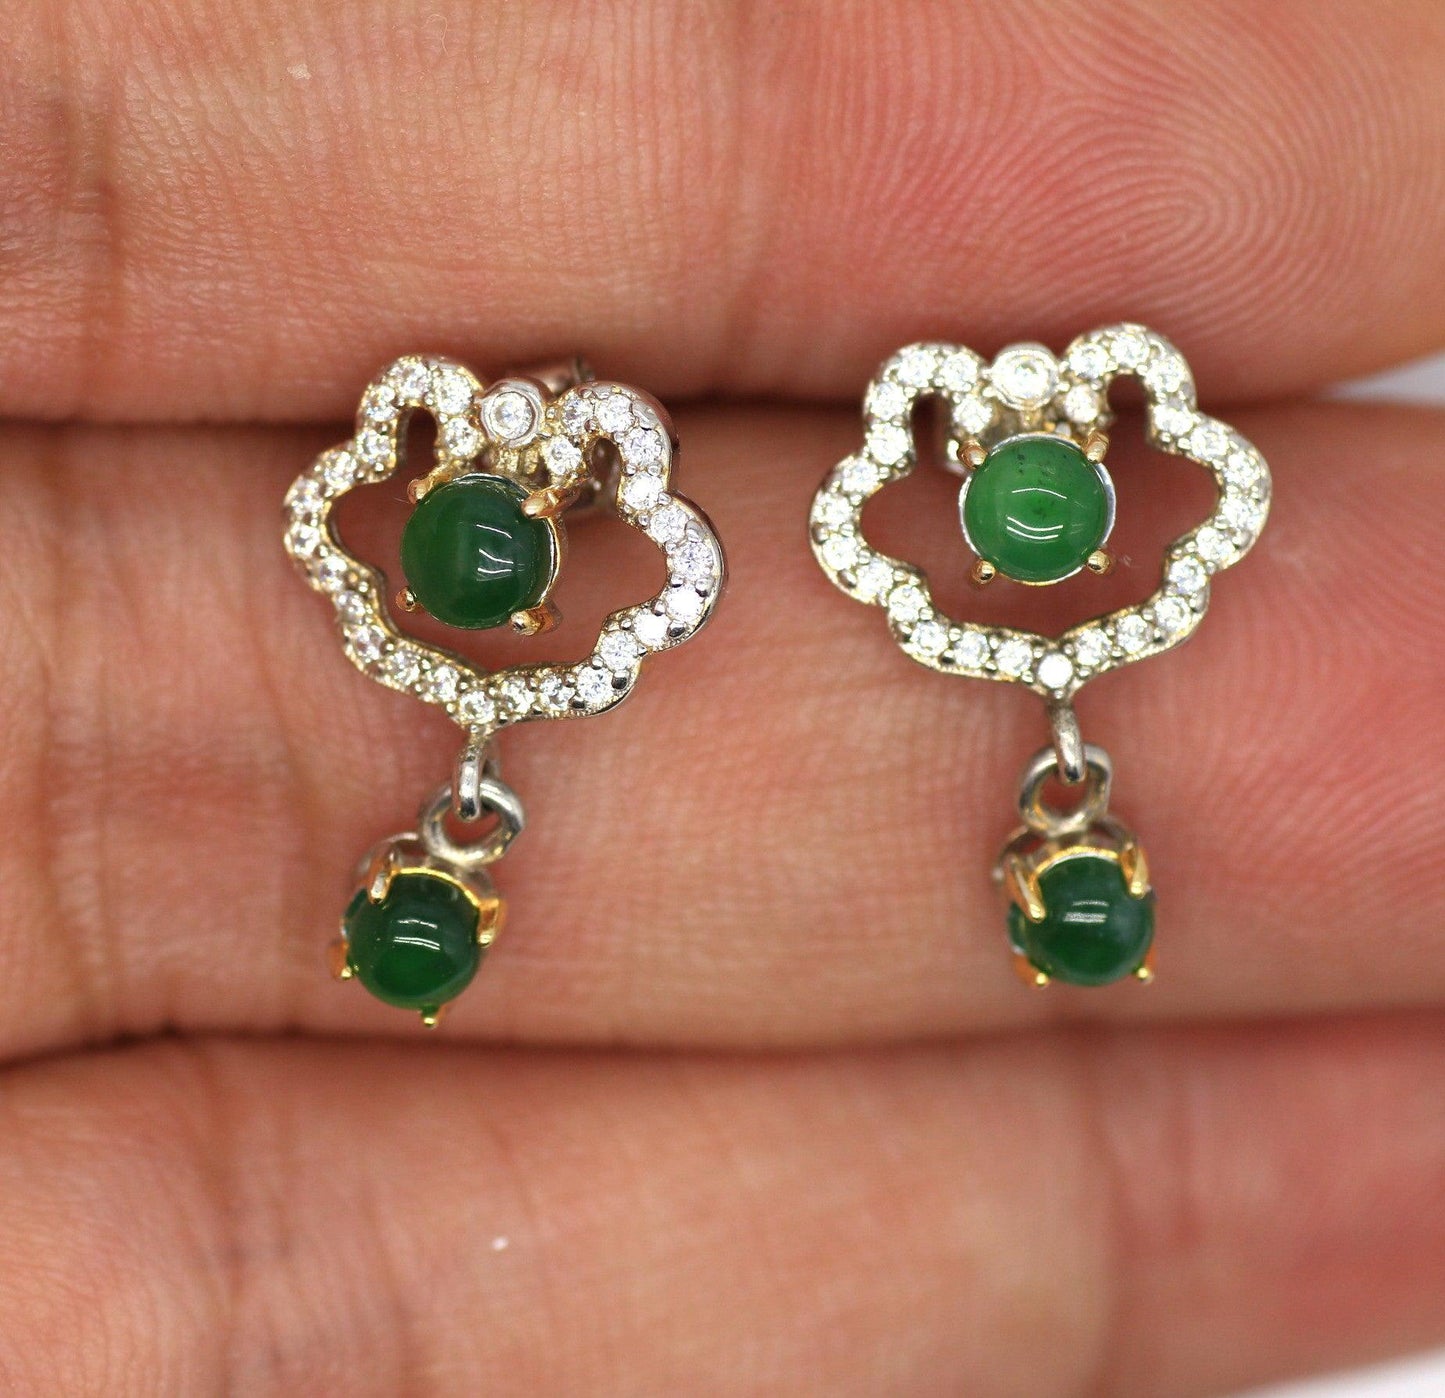 Type A Jadeite Jade Earrings s925 Silver Inlay ZA-QIU4-ZANH